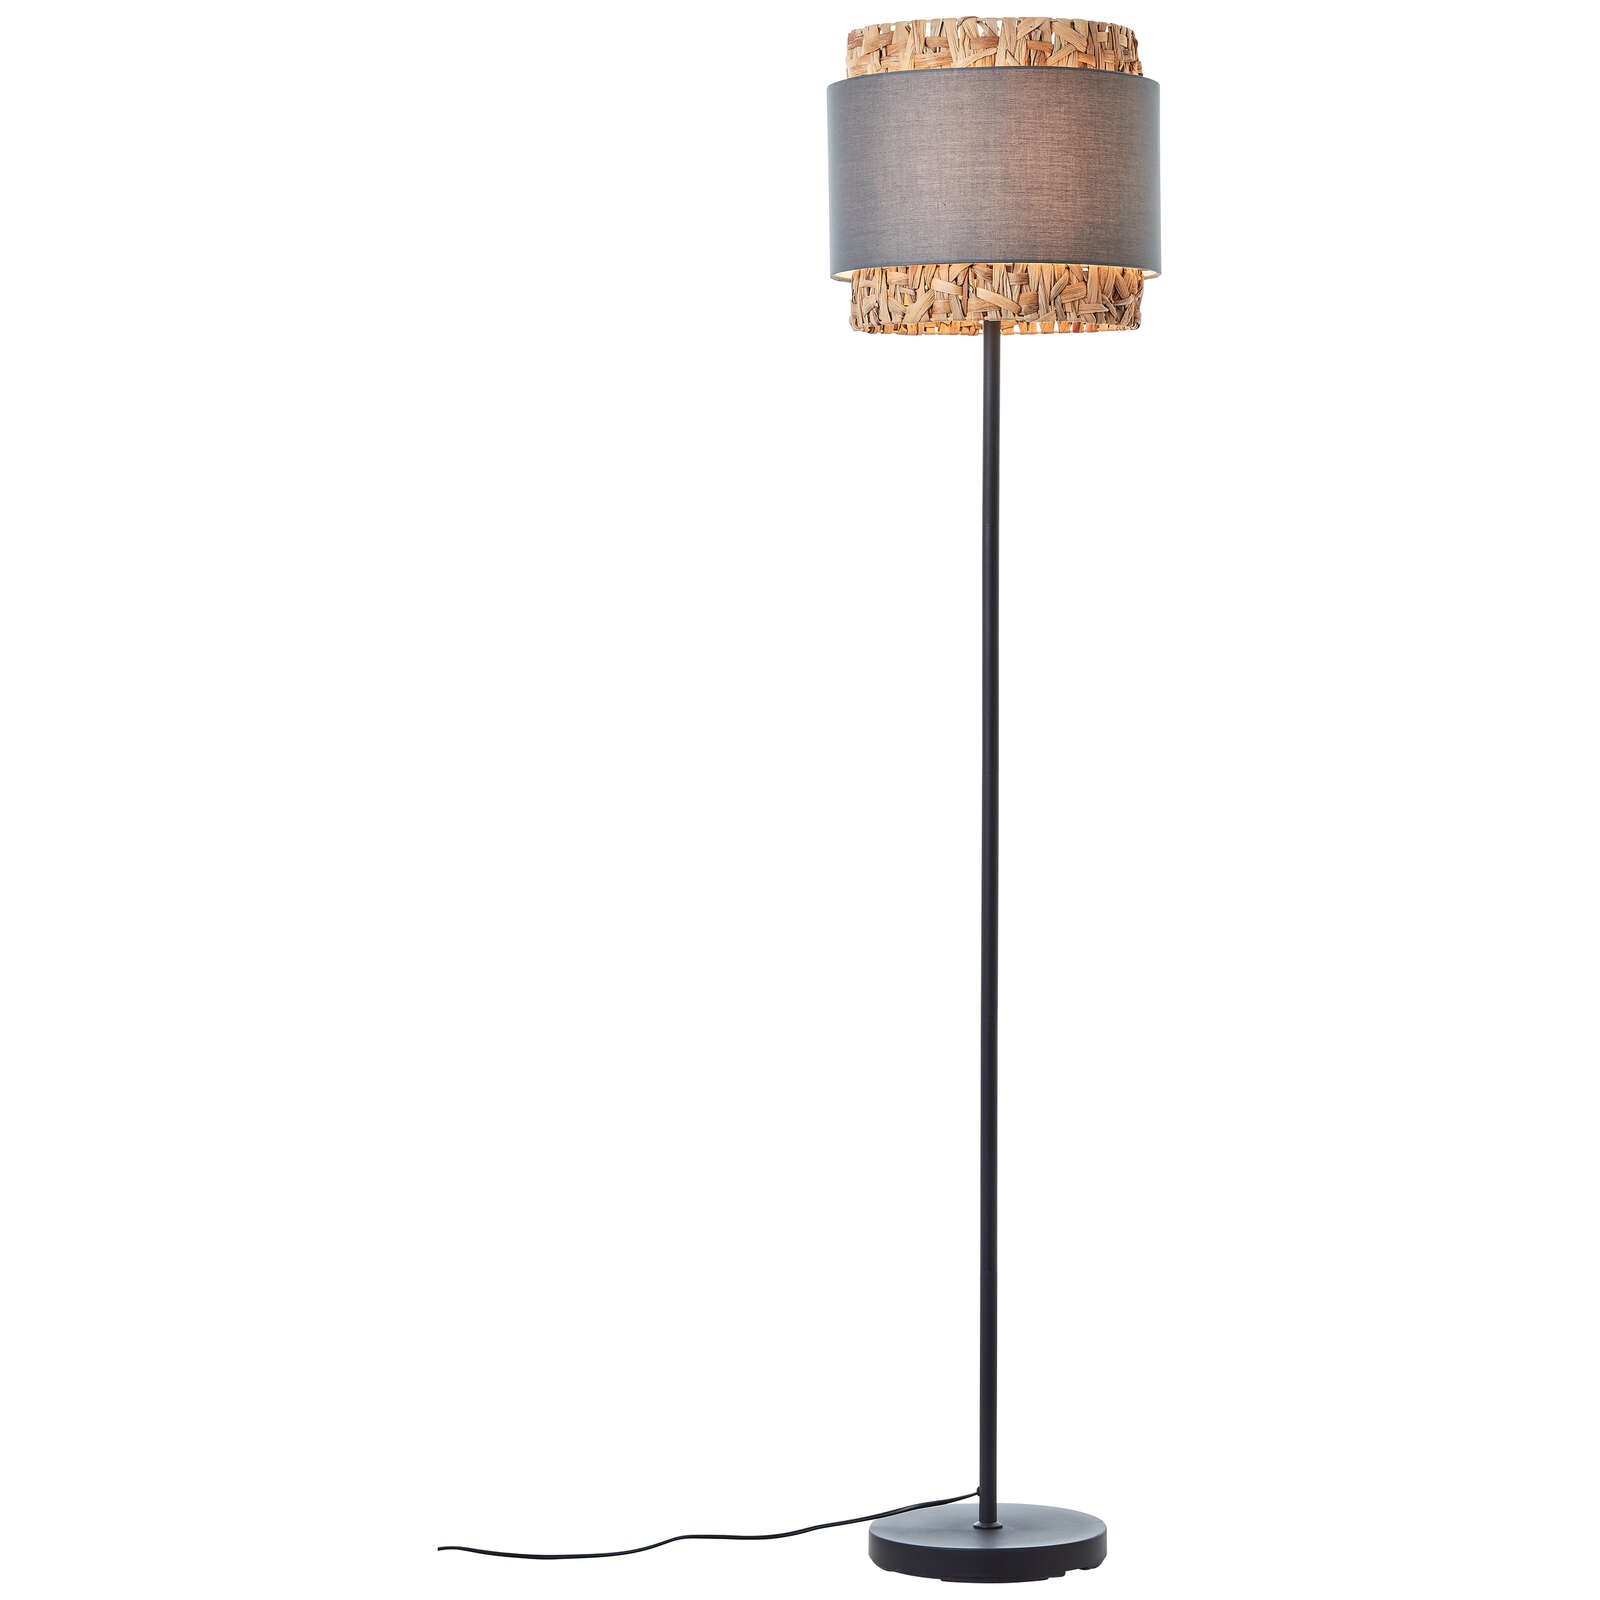             Floor lamp made of textile - Till 8 - Beige
        